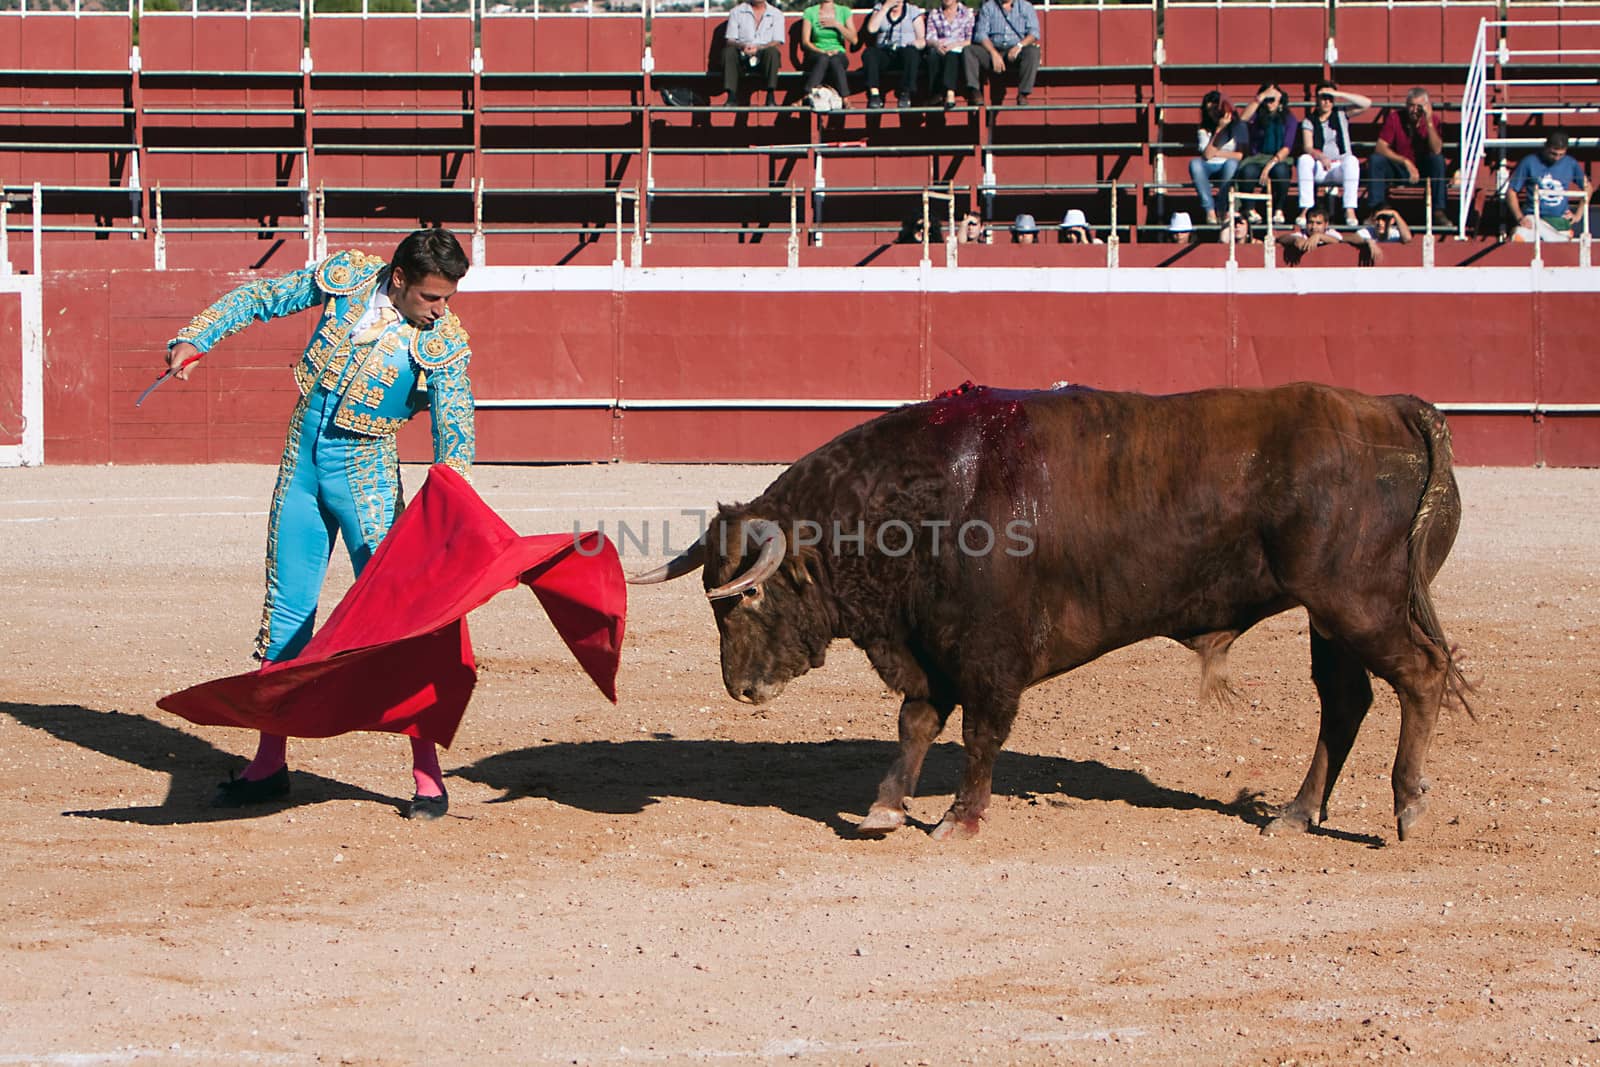 The Spanish bullfighter David Valiente by digicomphoto